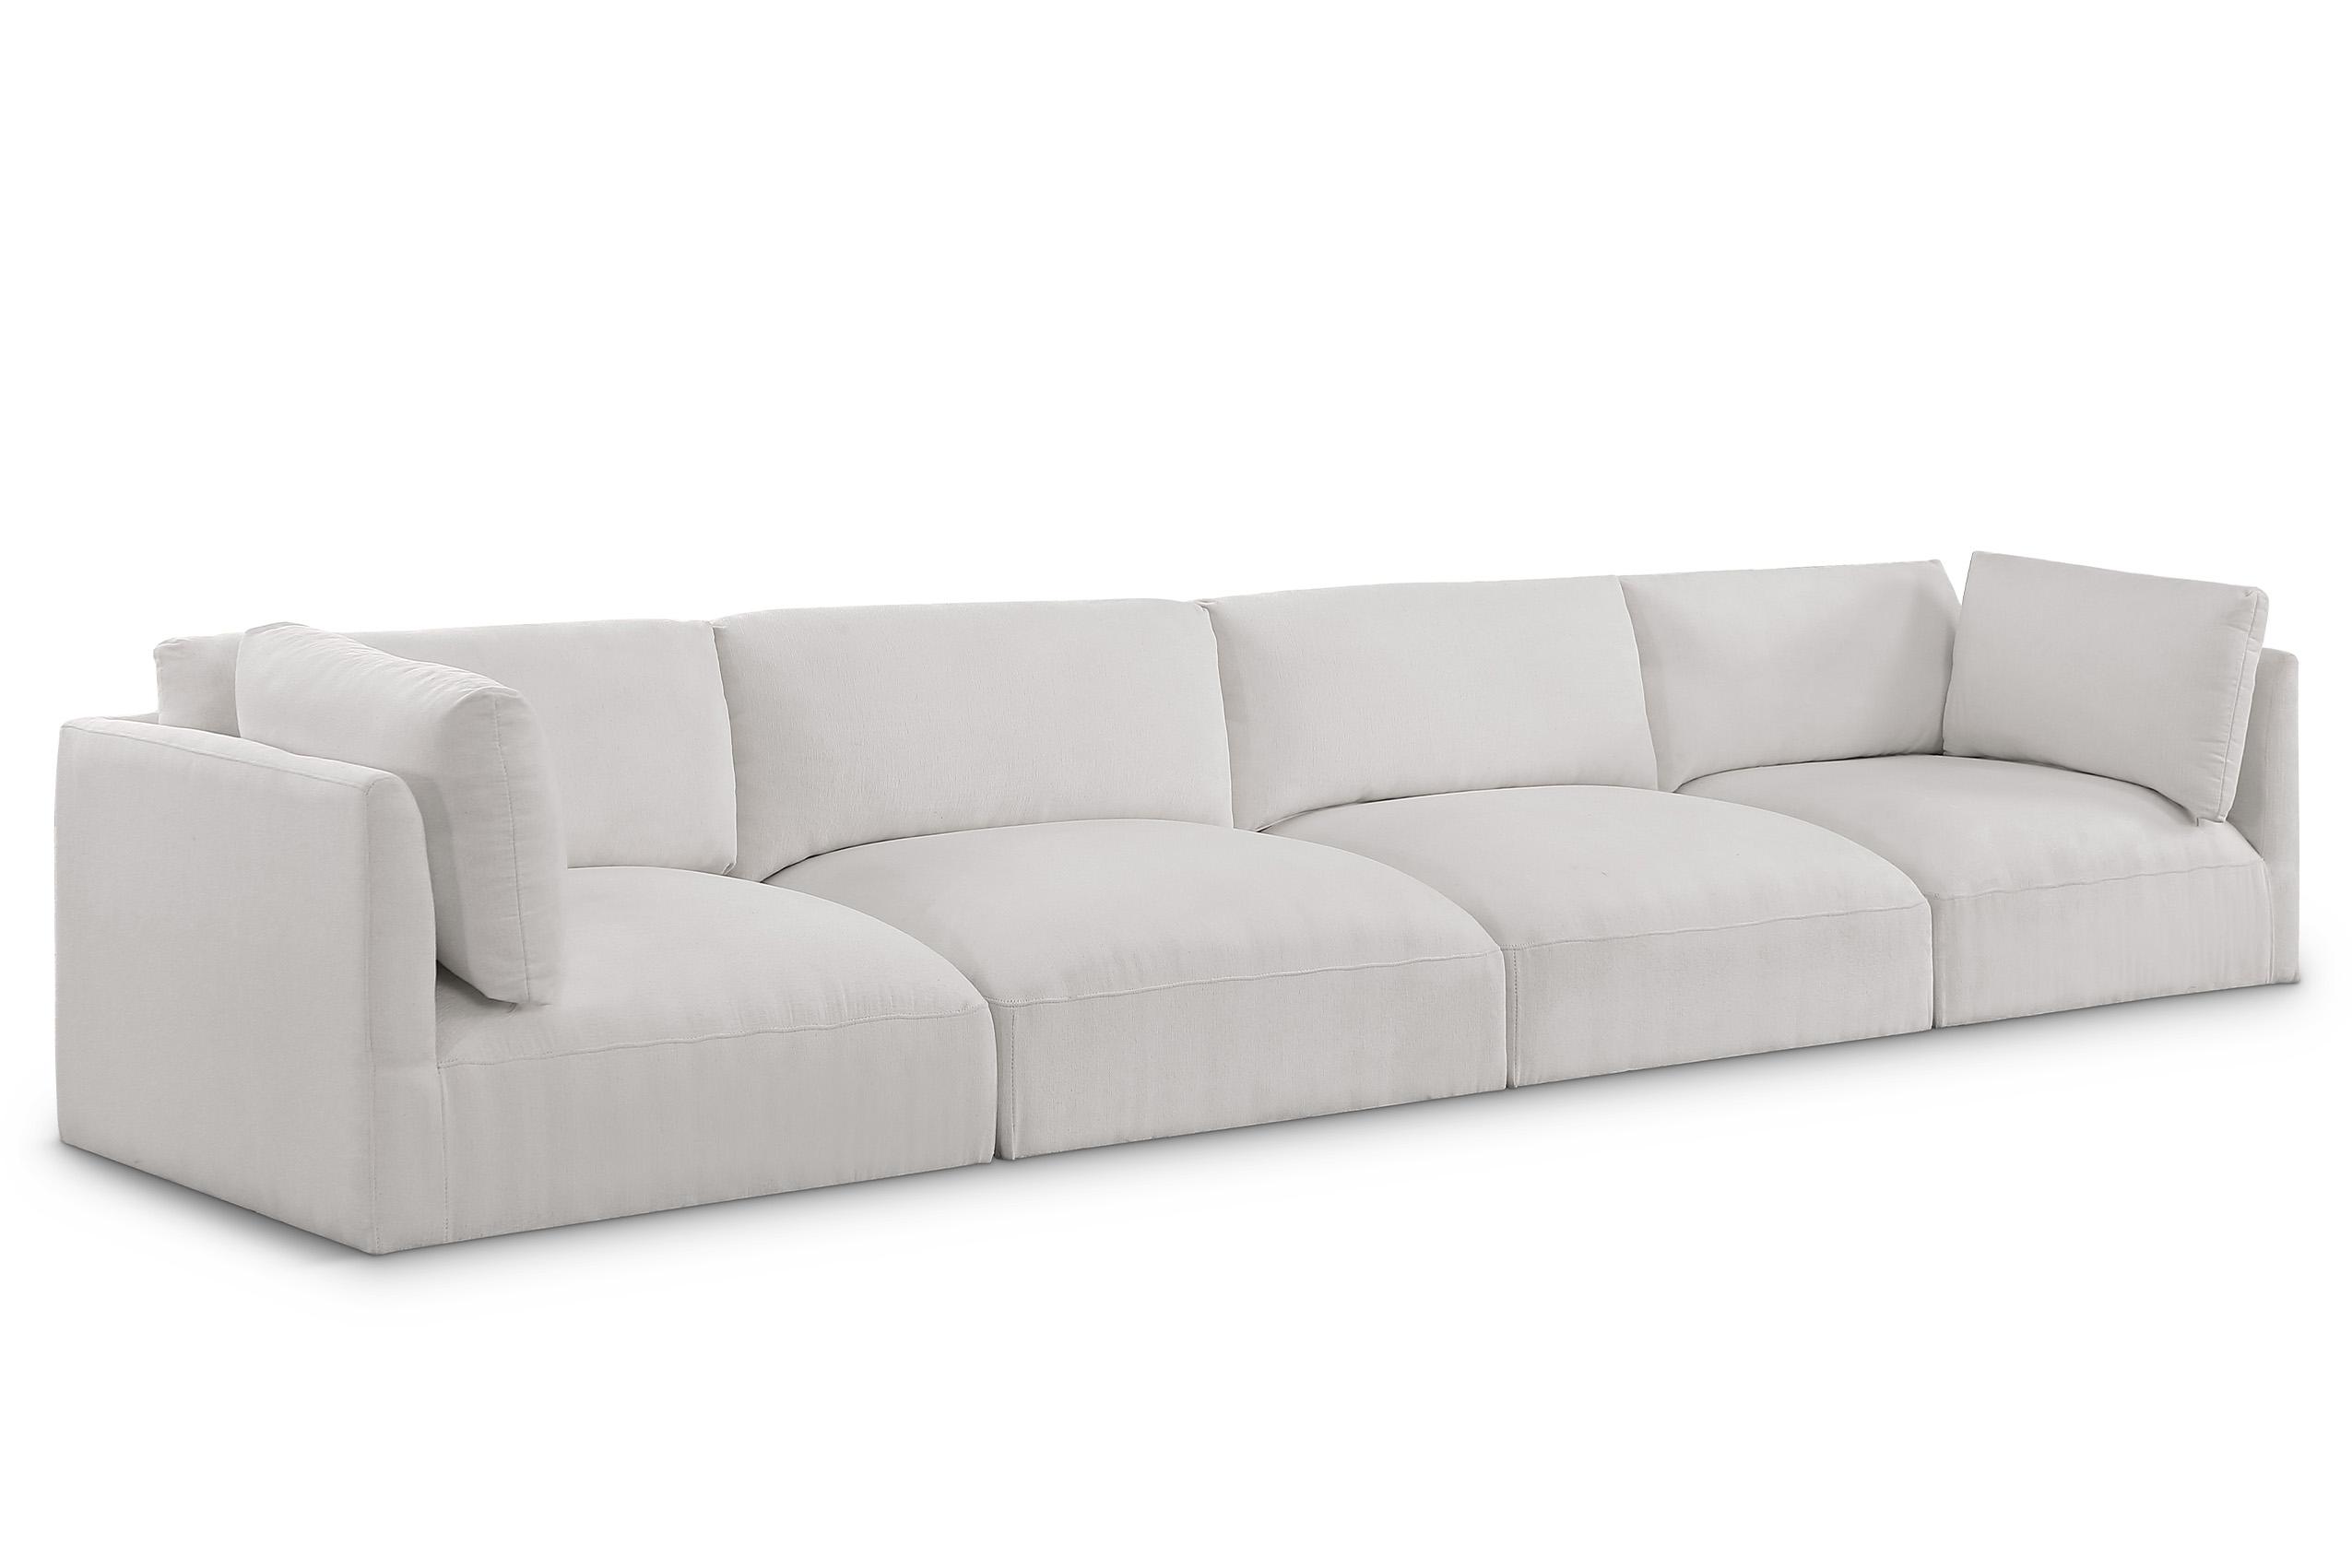 Contemporary, Modern Modular Sofa EASE 696Cream-S152B 696Cream-S152B in Cream Fabric